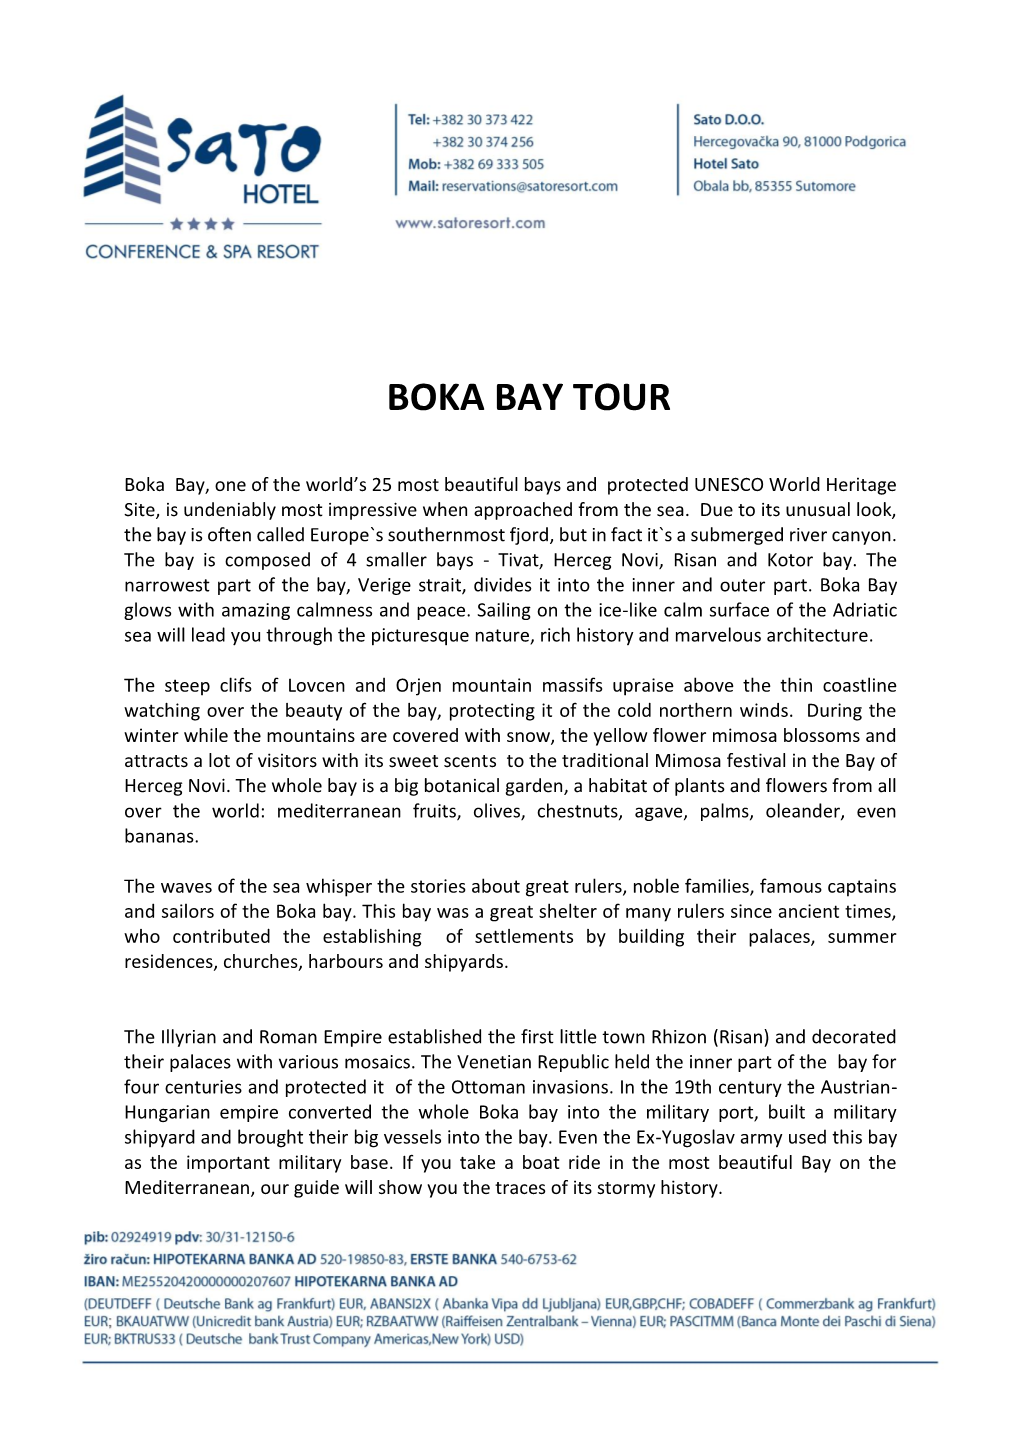 Boka Bay Tour